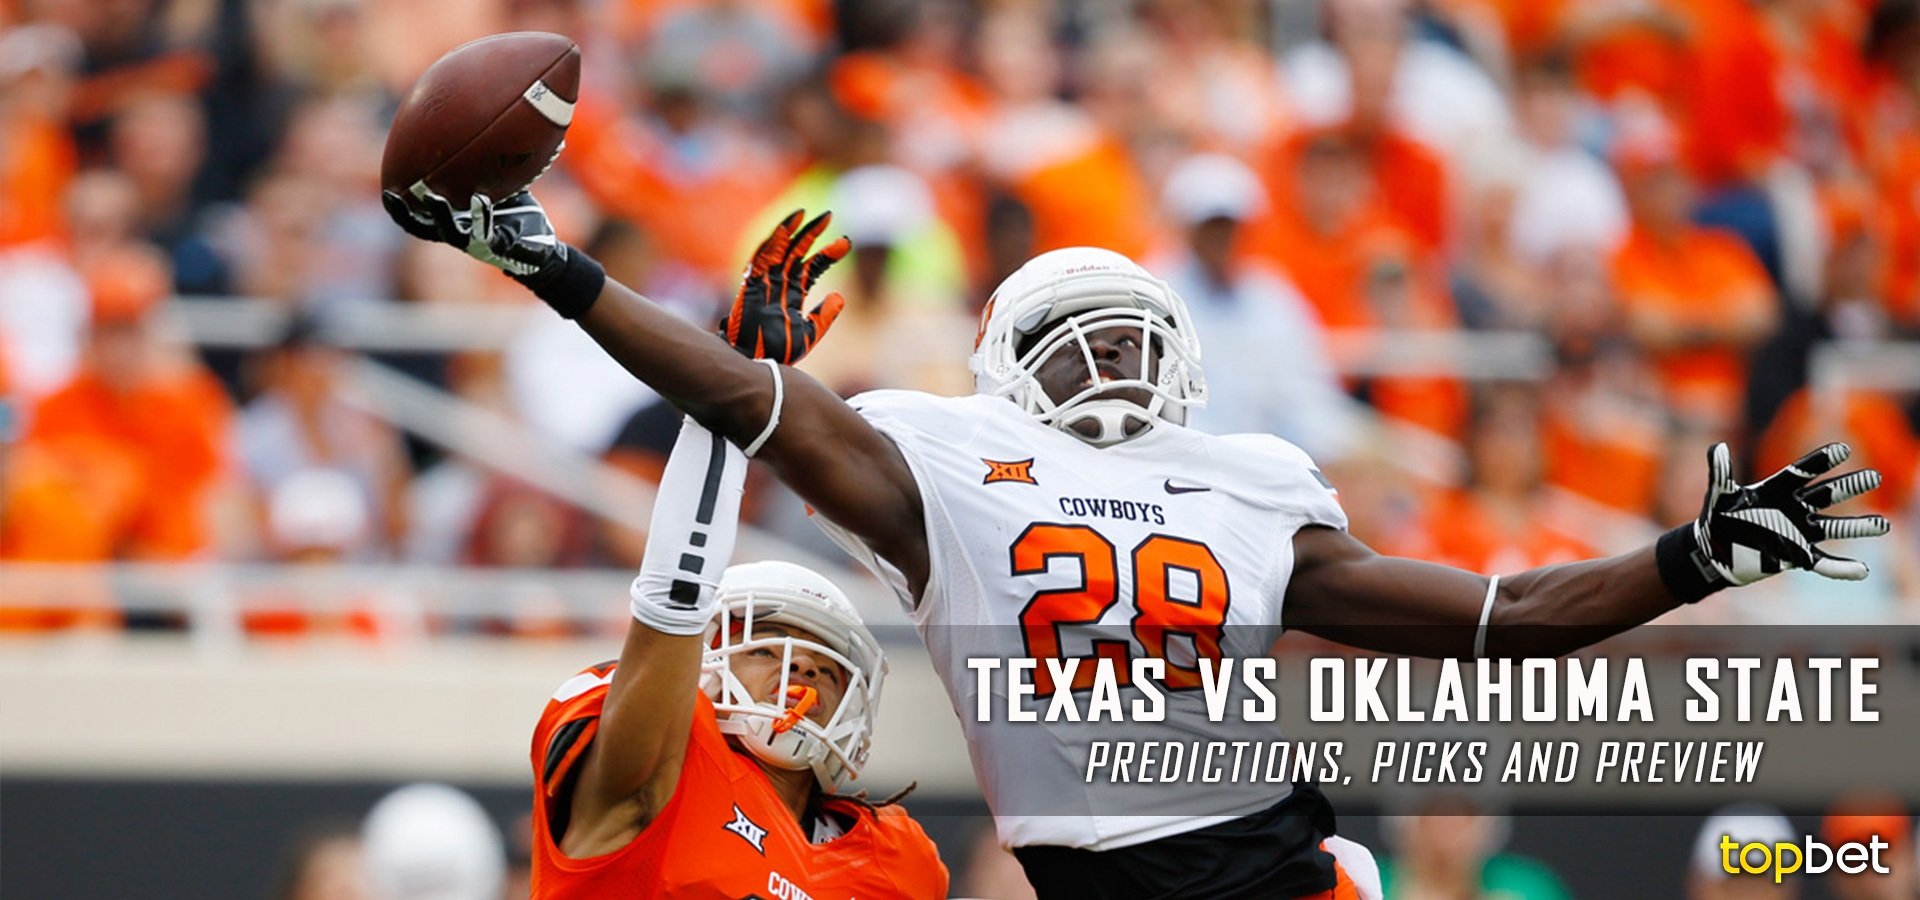 Texas vs Oklahoma State Football Predictions, Picks and Odds